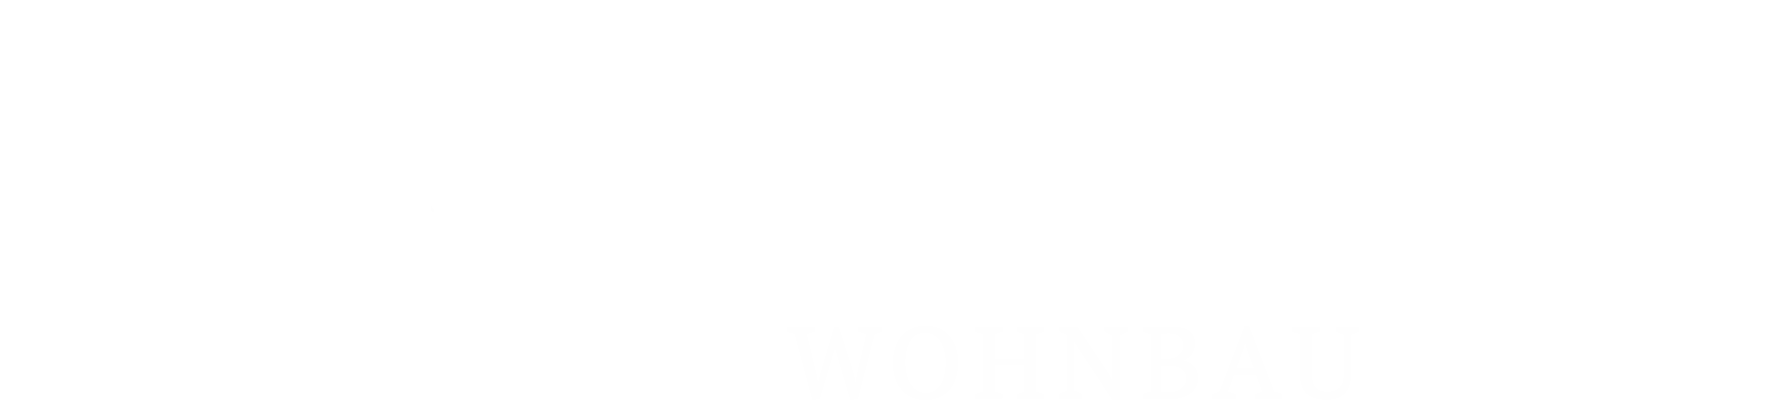 Karl Monitzer Hauptseite